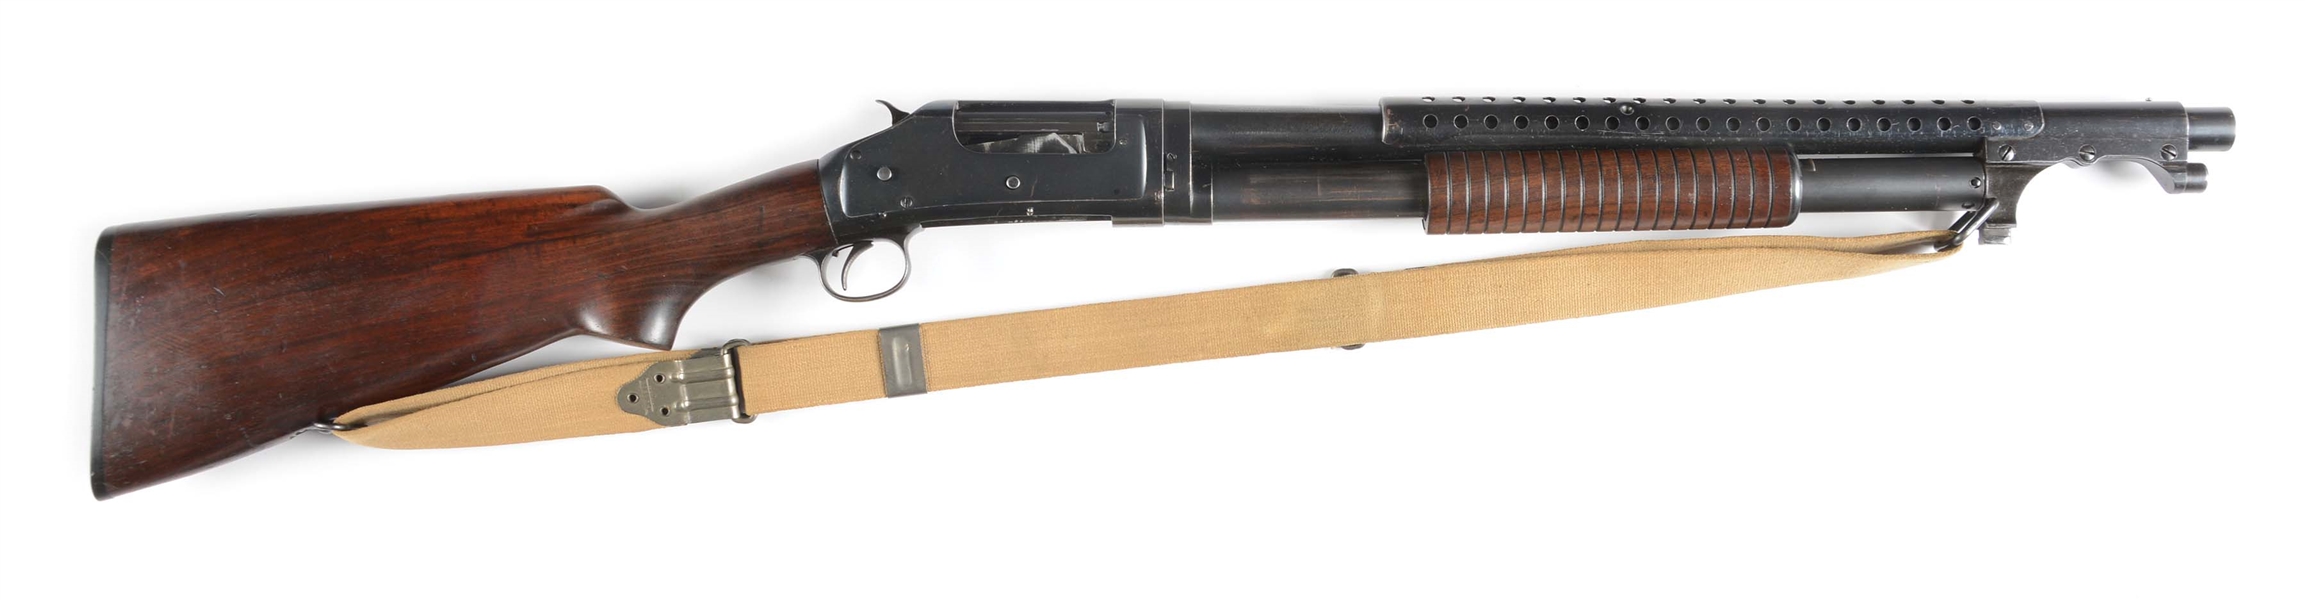 (C) WORLD WAR II WINCHESTER MODEL 1897 US MARKED TRENCH GUN.